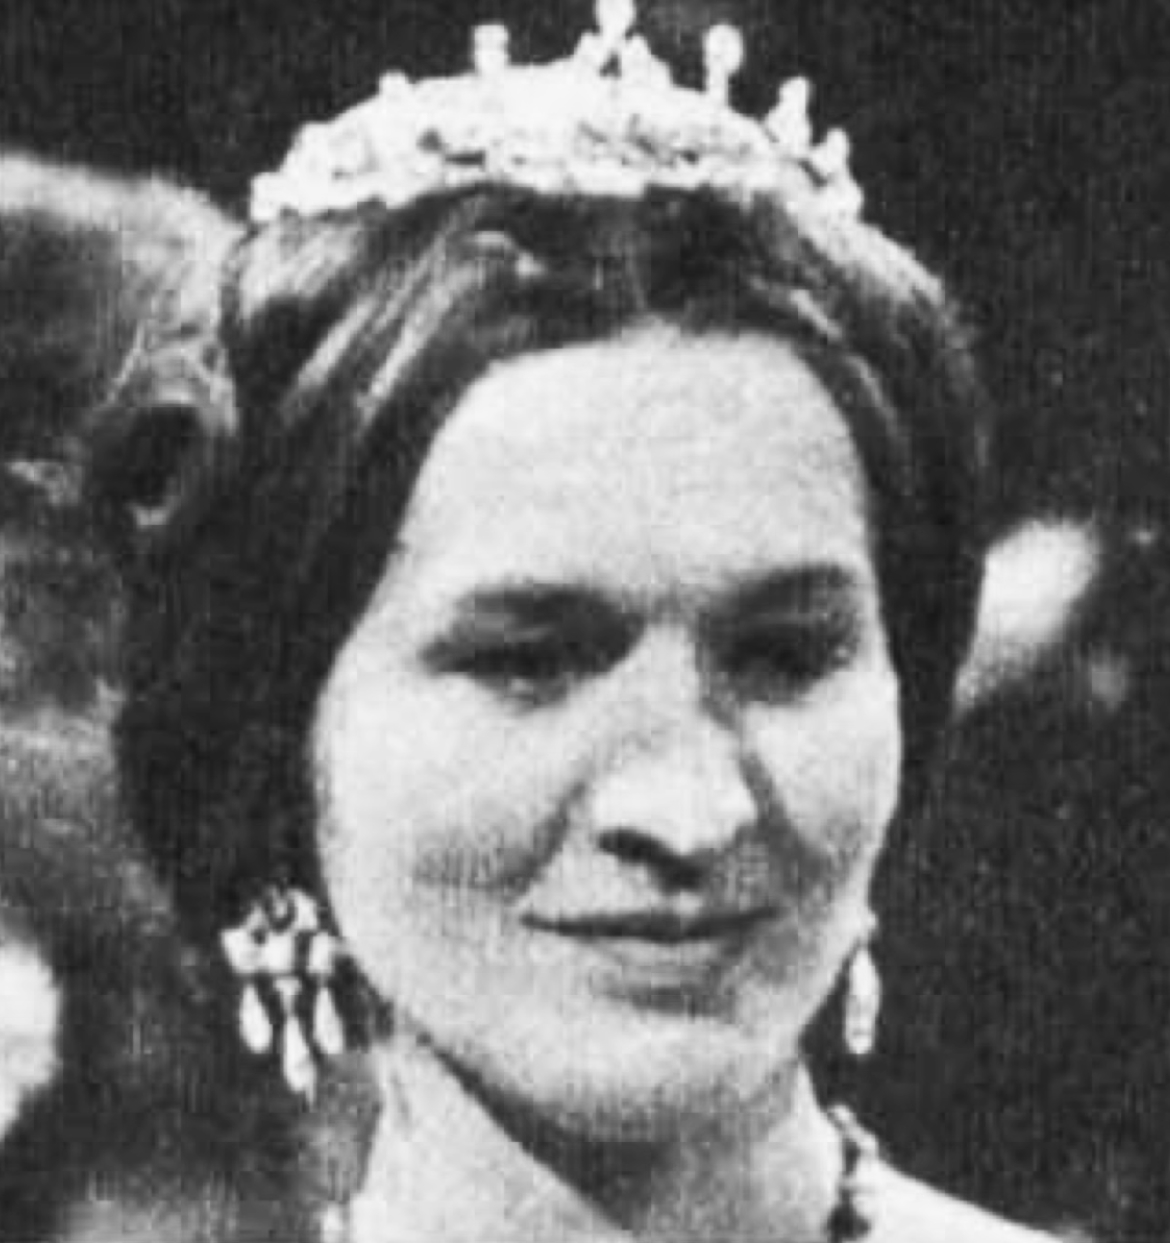 Patricia Routledge as Queen Victoria